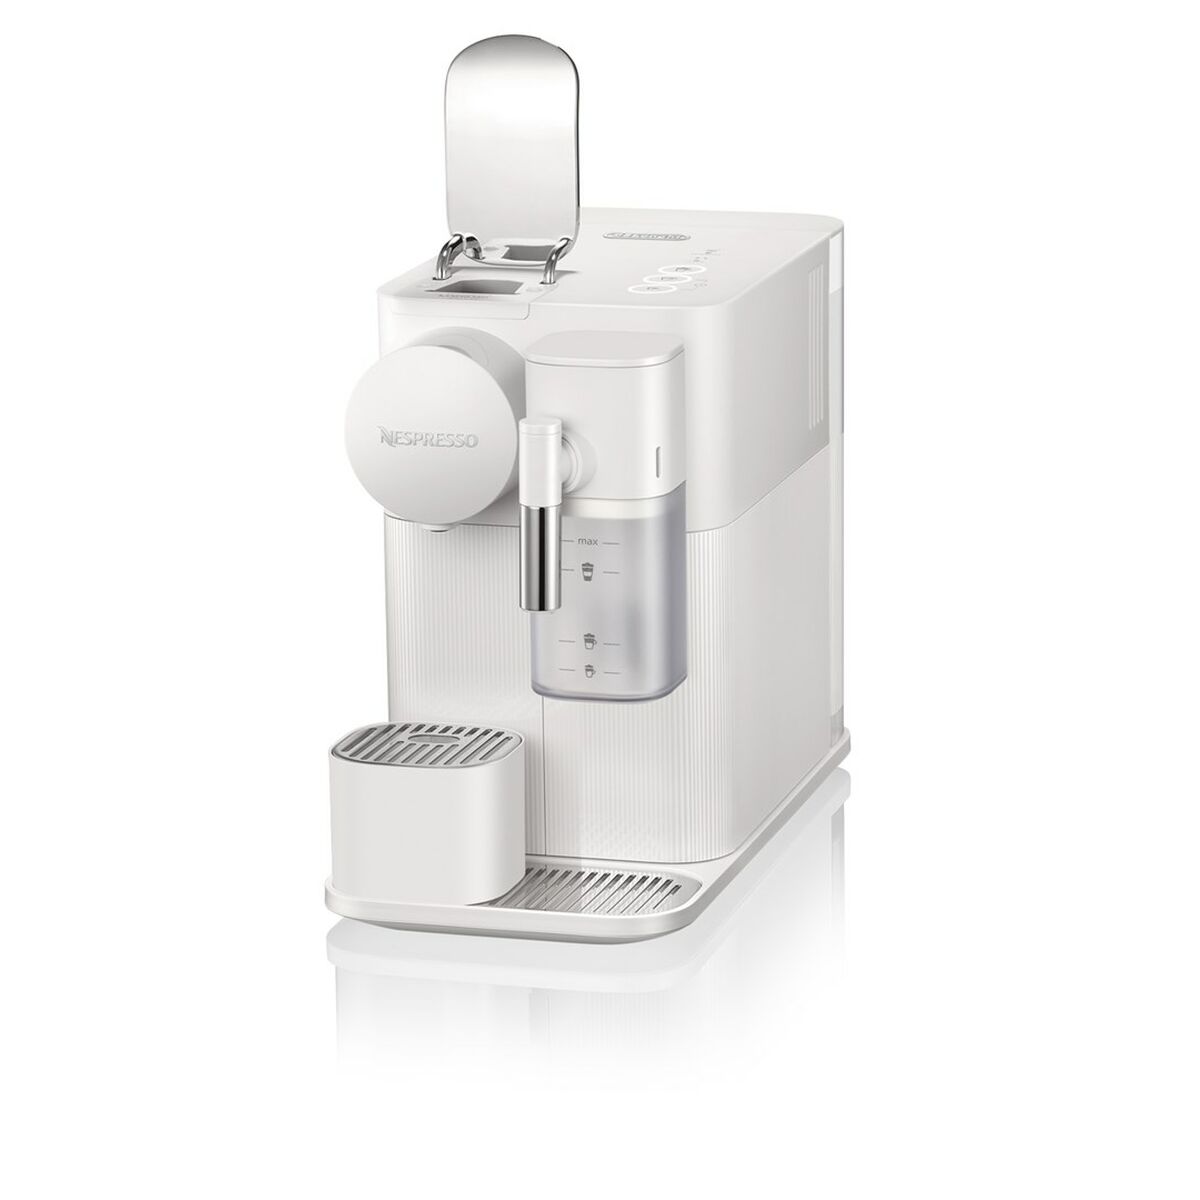 Superautomatische Kaffeemaschine DeLonghi EN510.W Weiß 1400 W 19 bar 1 L - CA International 